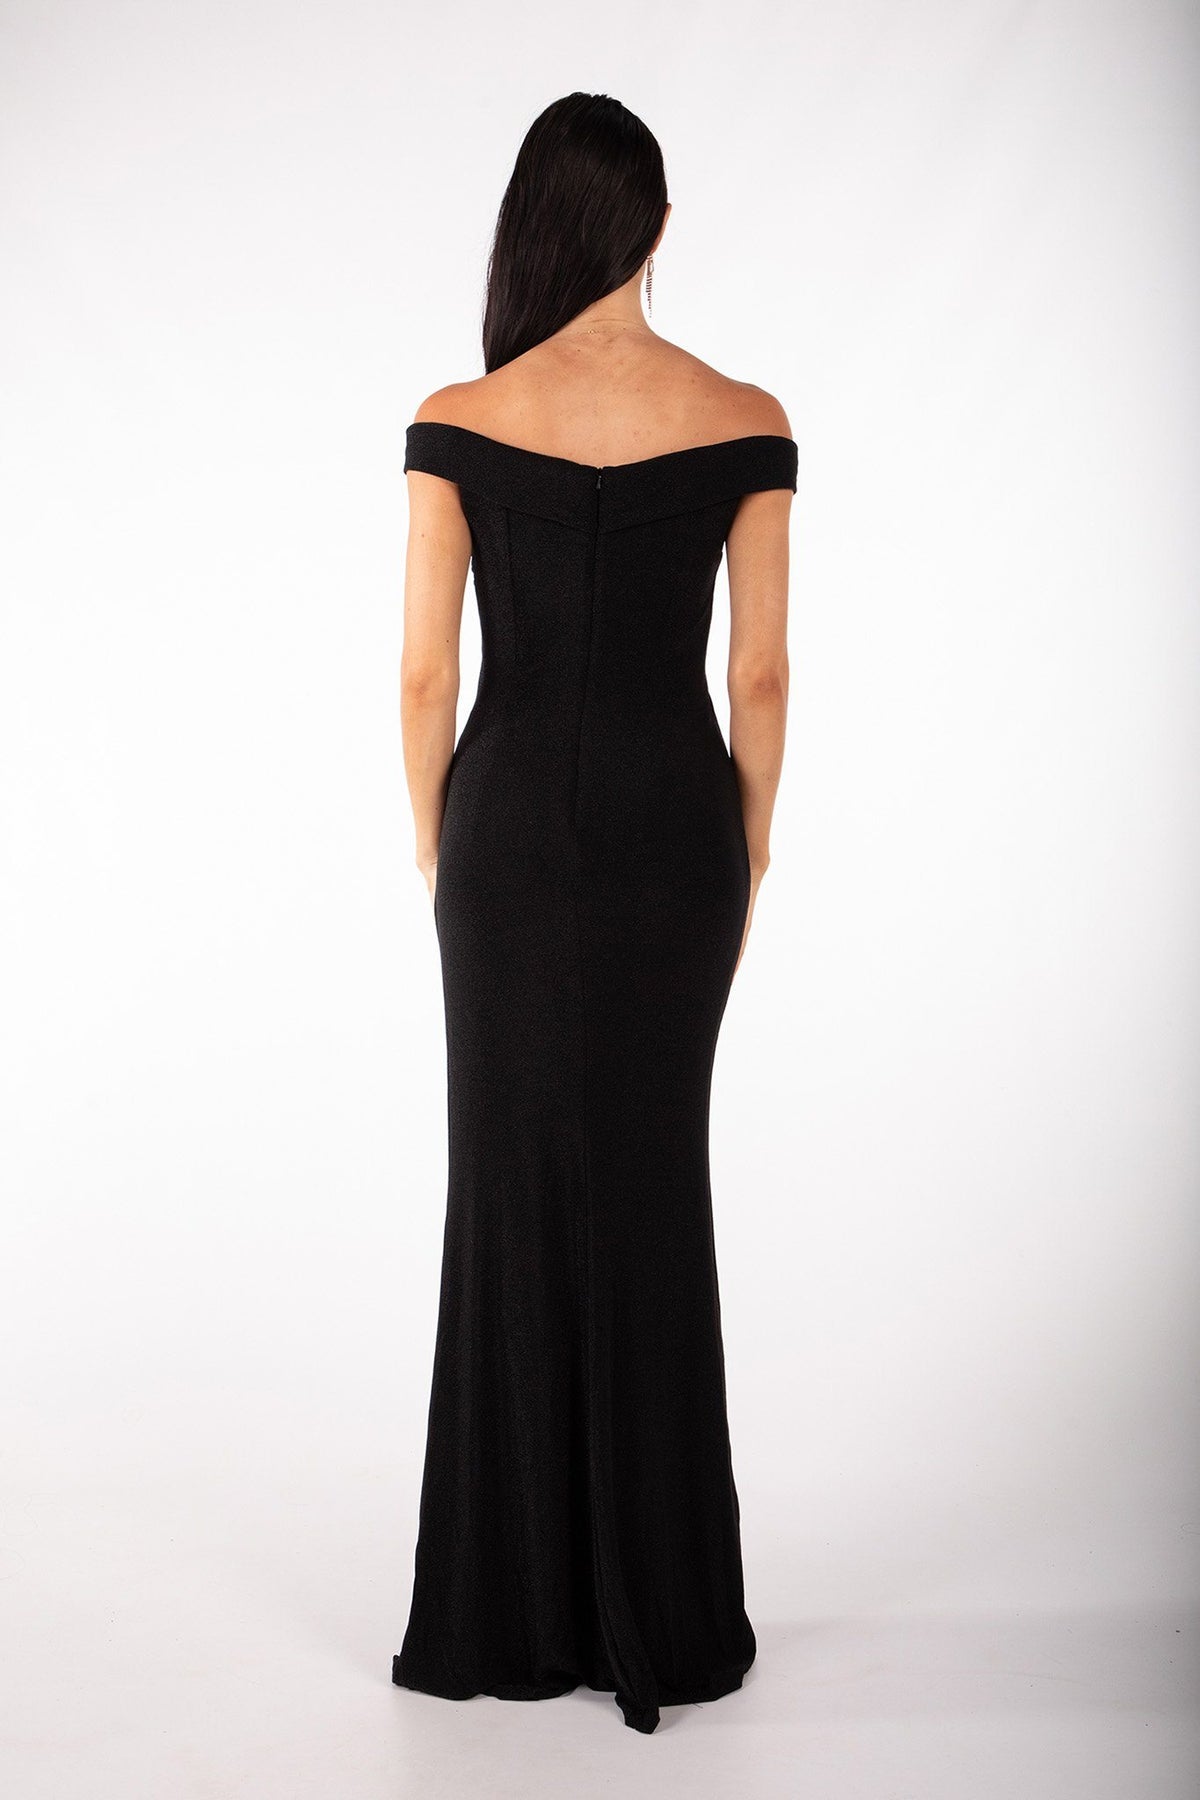 Open shoulder back image of black glitter maxi dress with off-the-shoulder sweetheart neckline and gathering detail